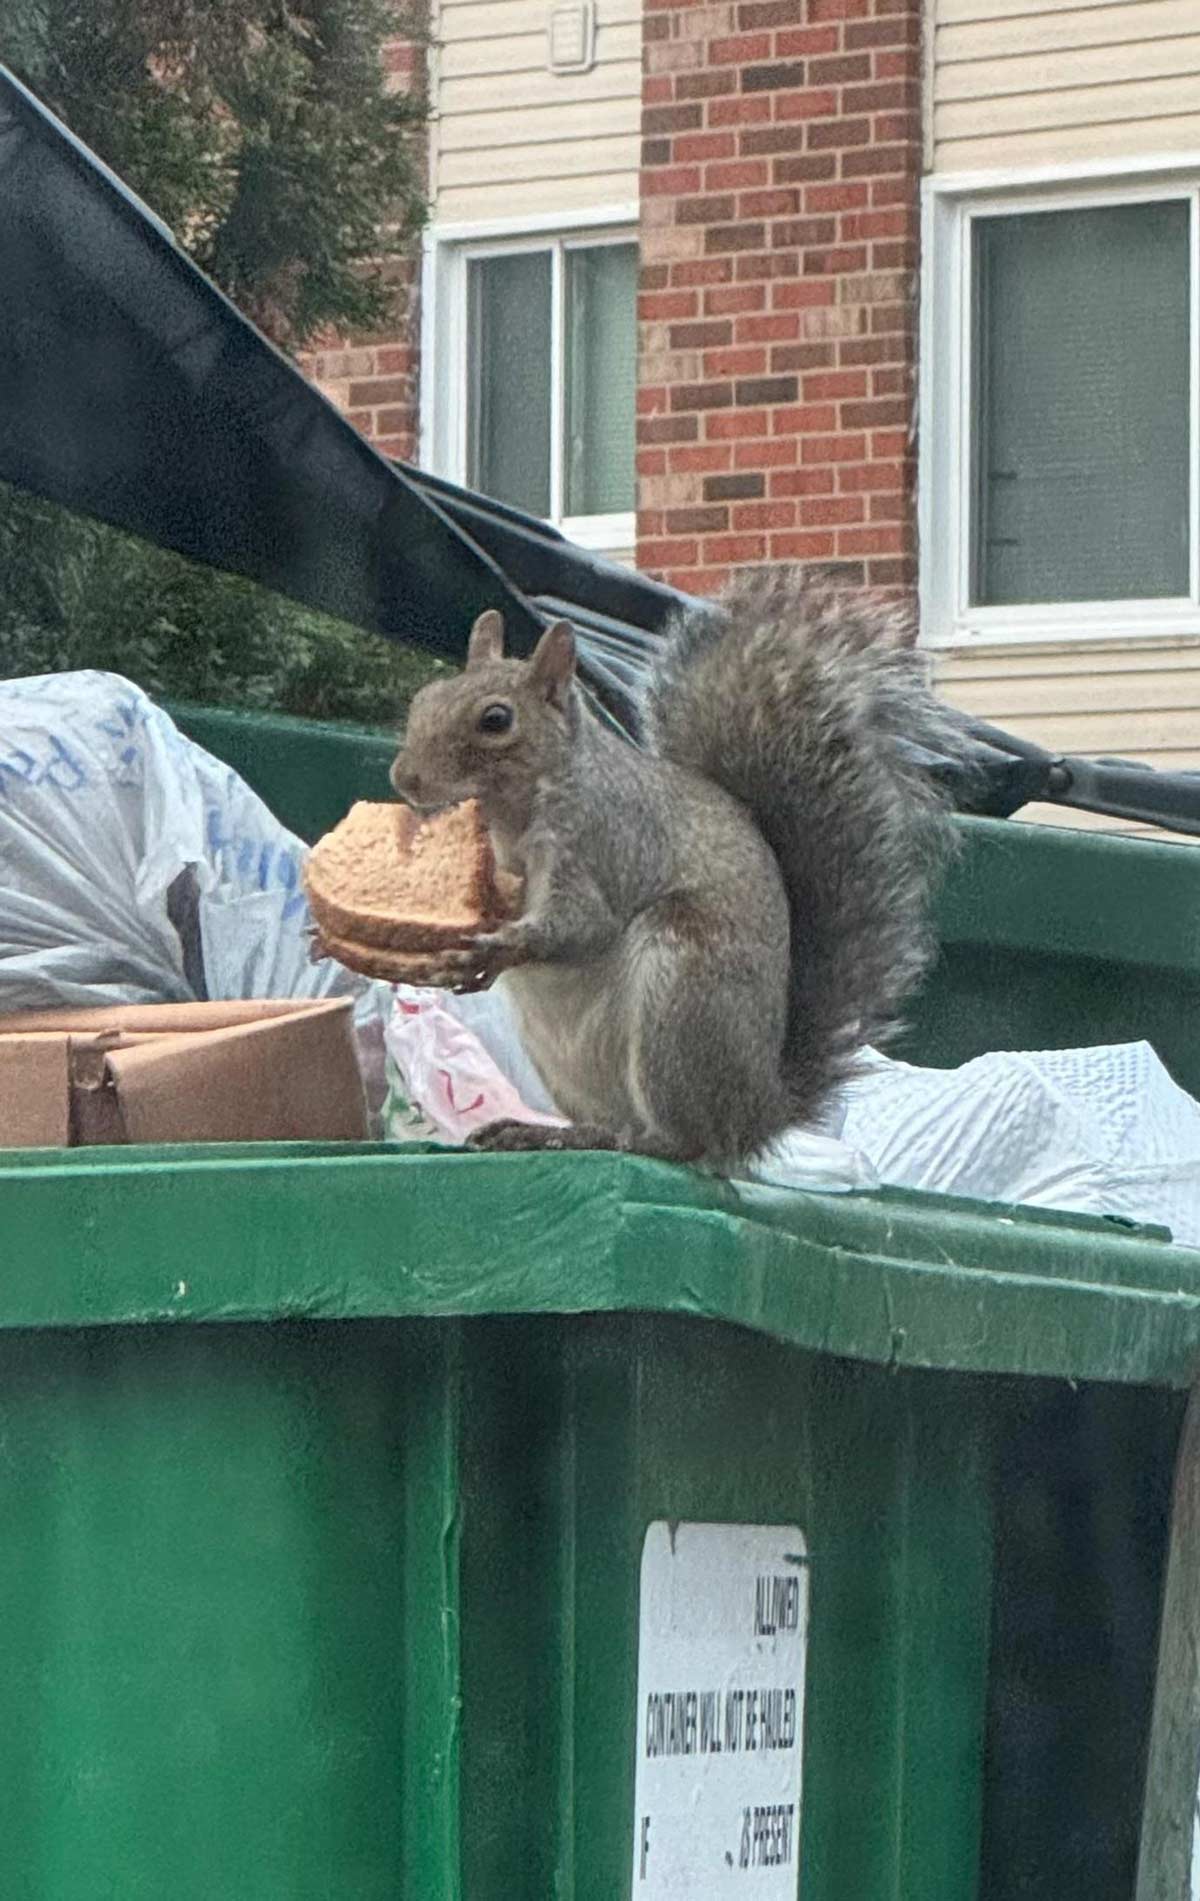 Squirrel eating a sandwich